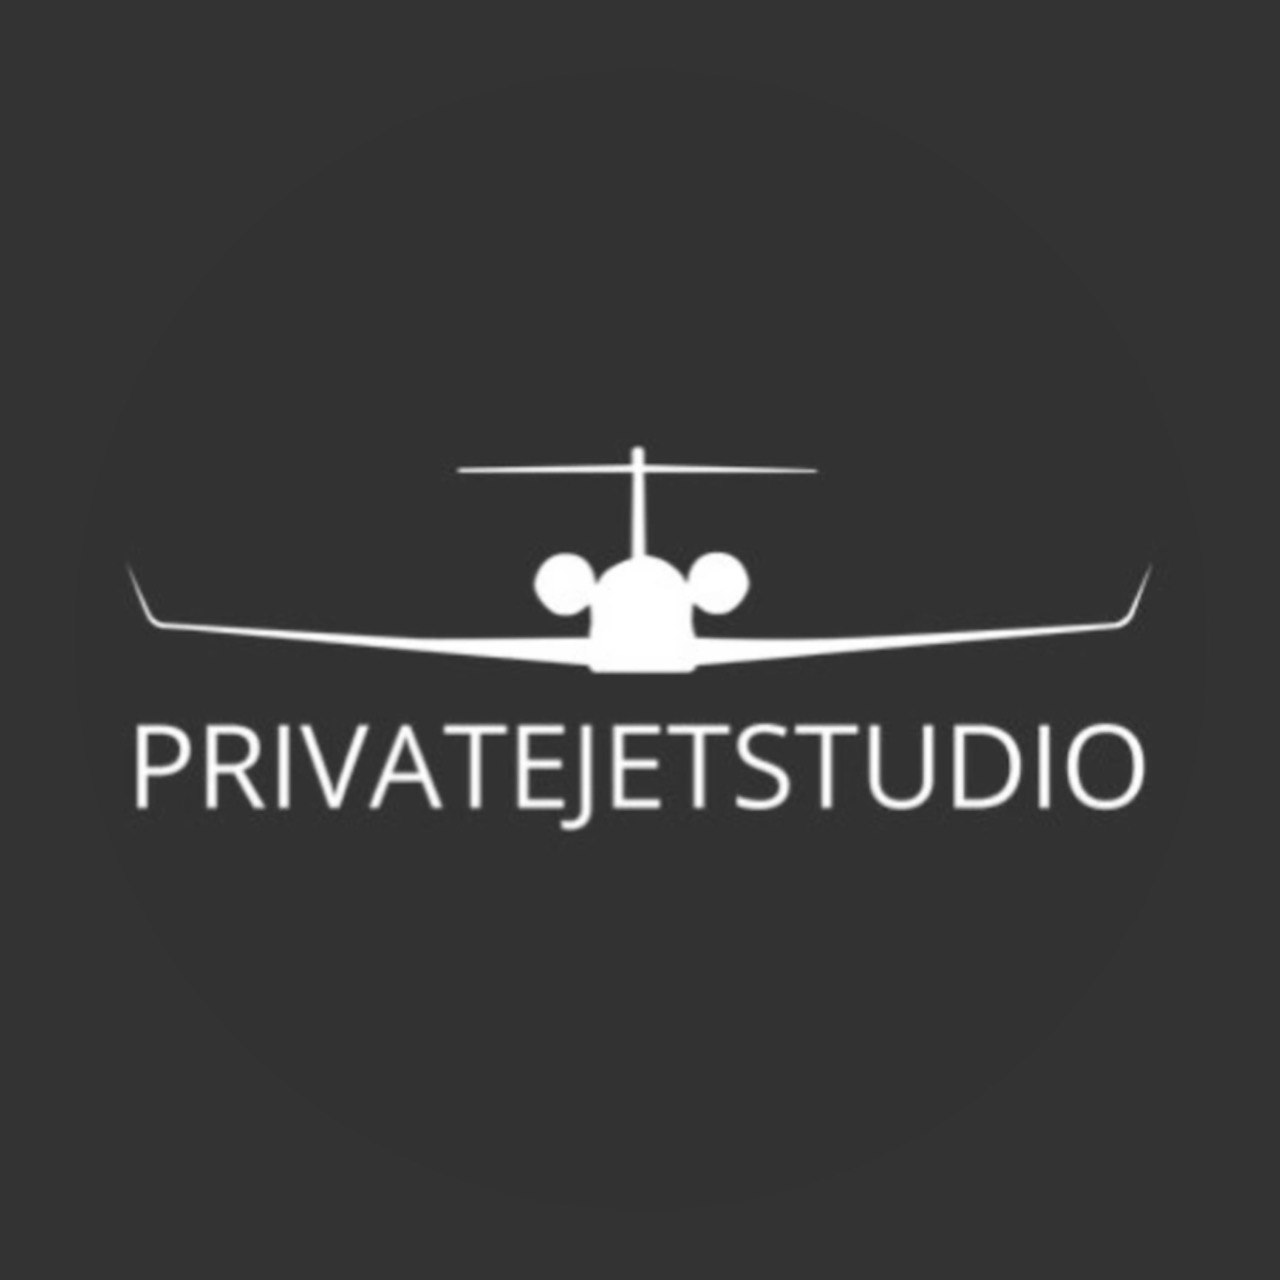 Private Jet Studio